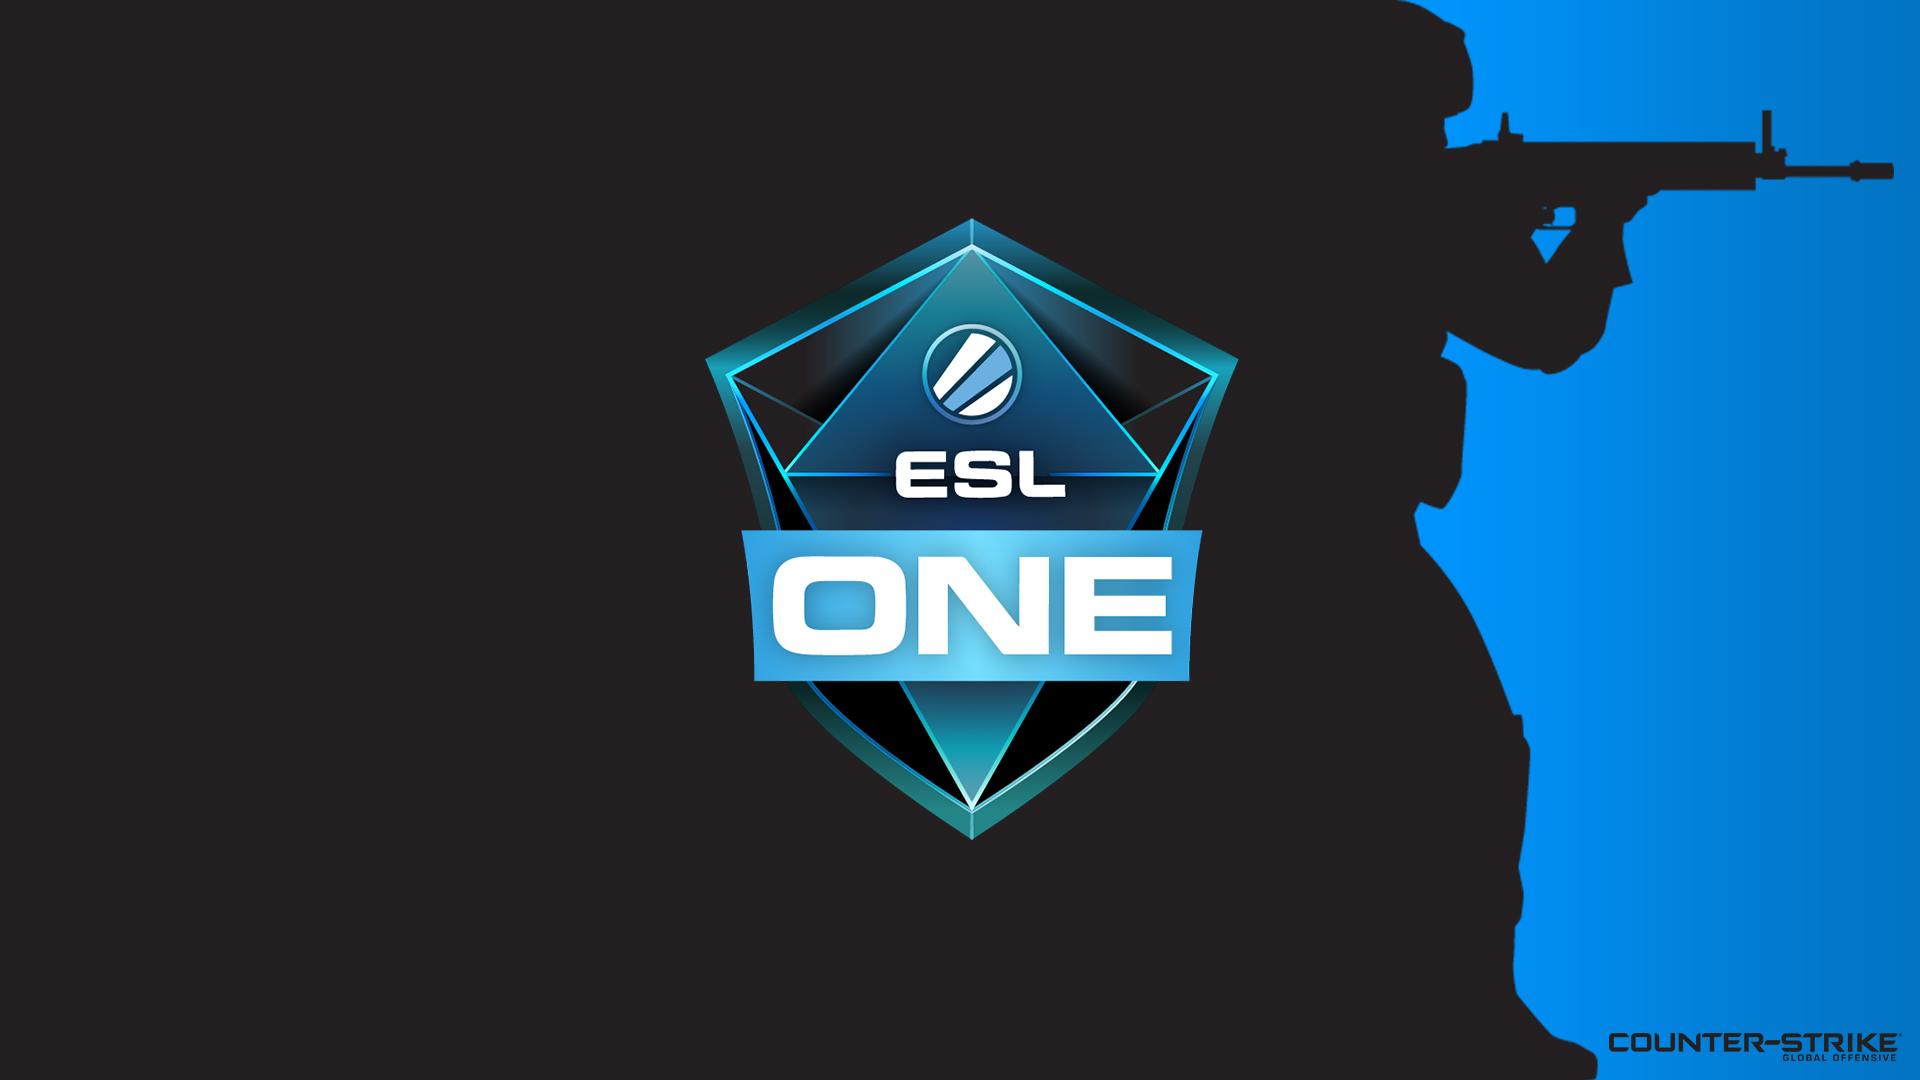 ESL ONE 2016 created